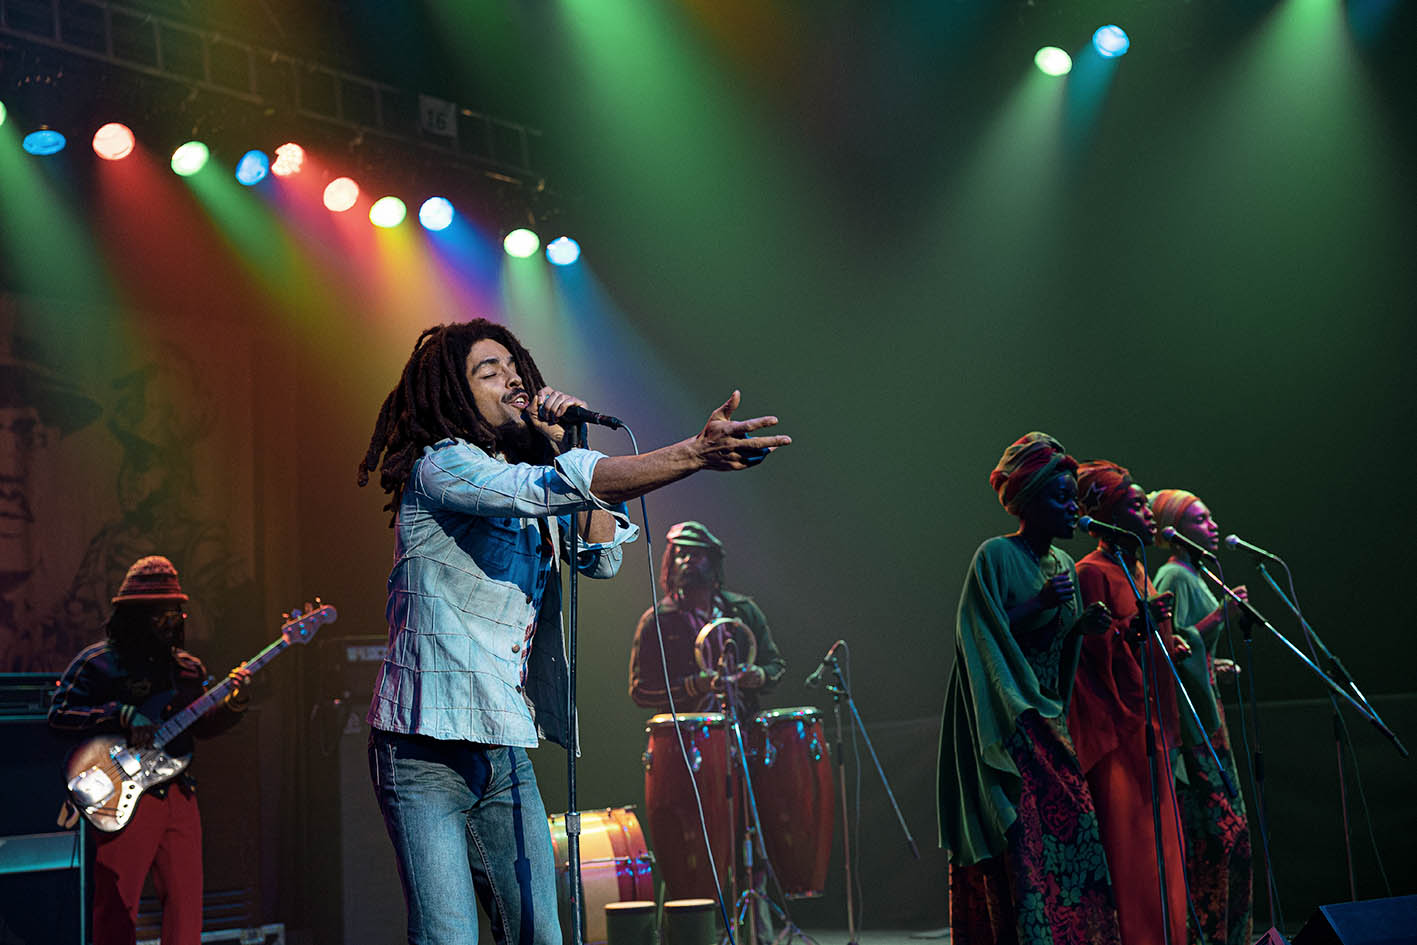 O Kinglsey Ben-Adir στο ρόλο του “Bob Marley” in Bob Marley στην ταινία¨One Love